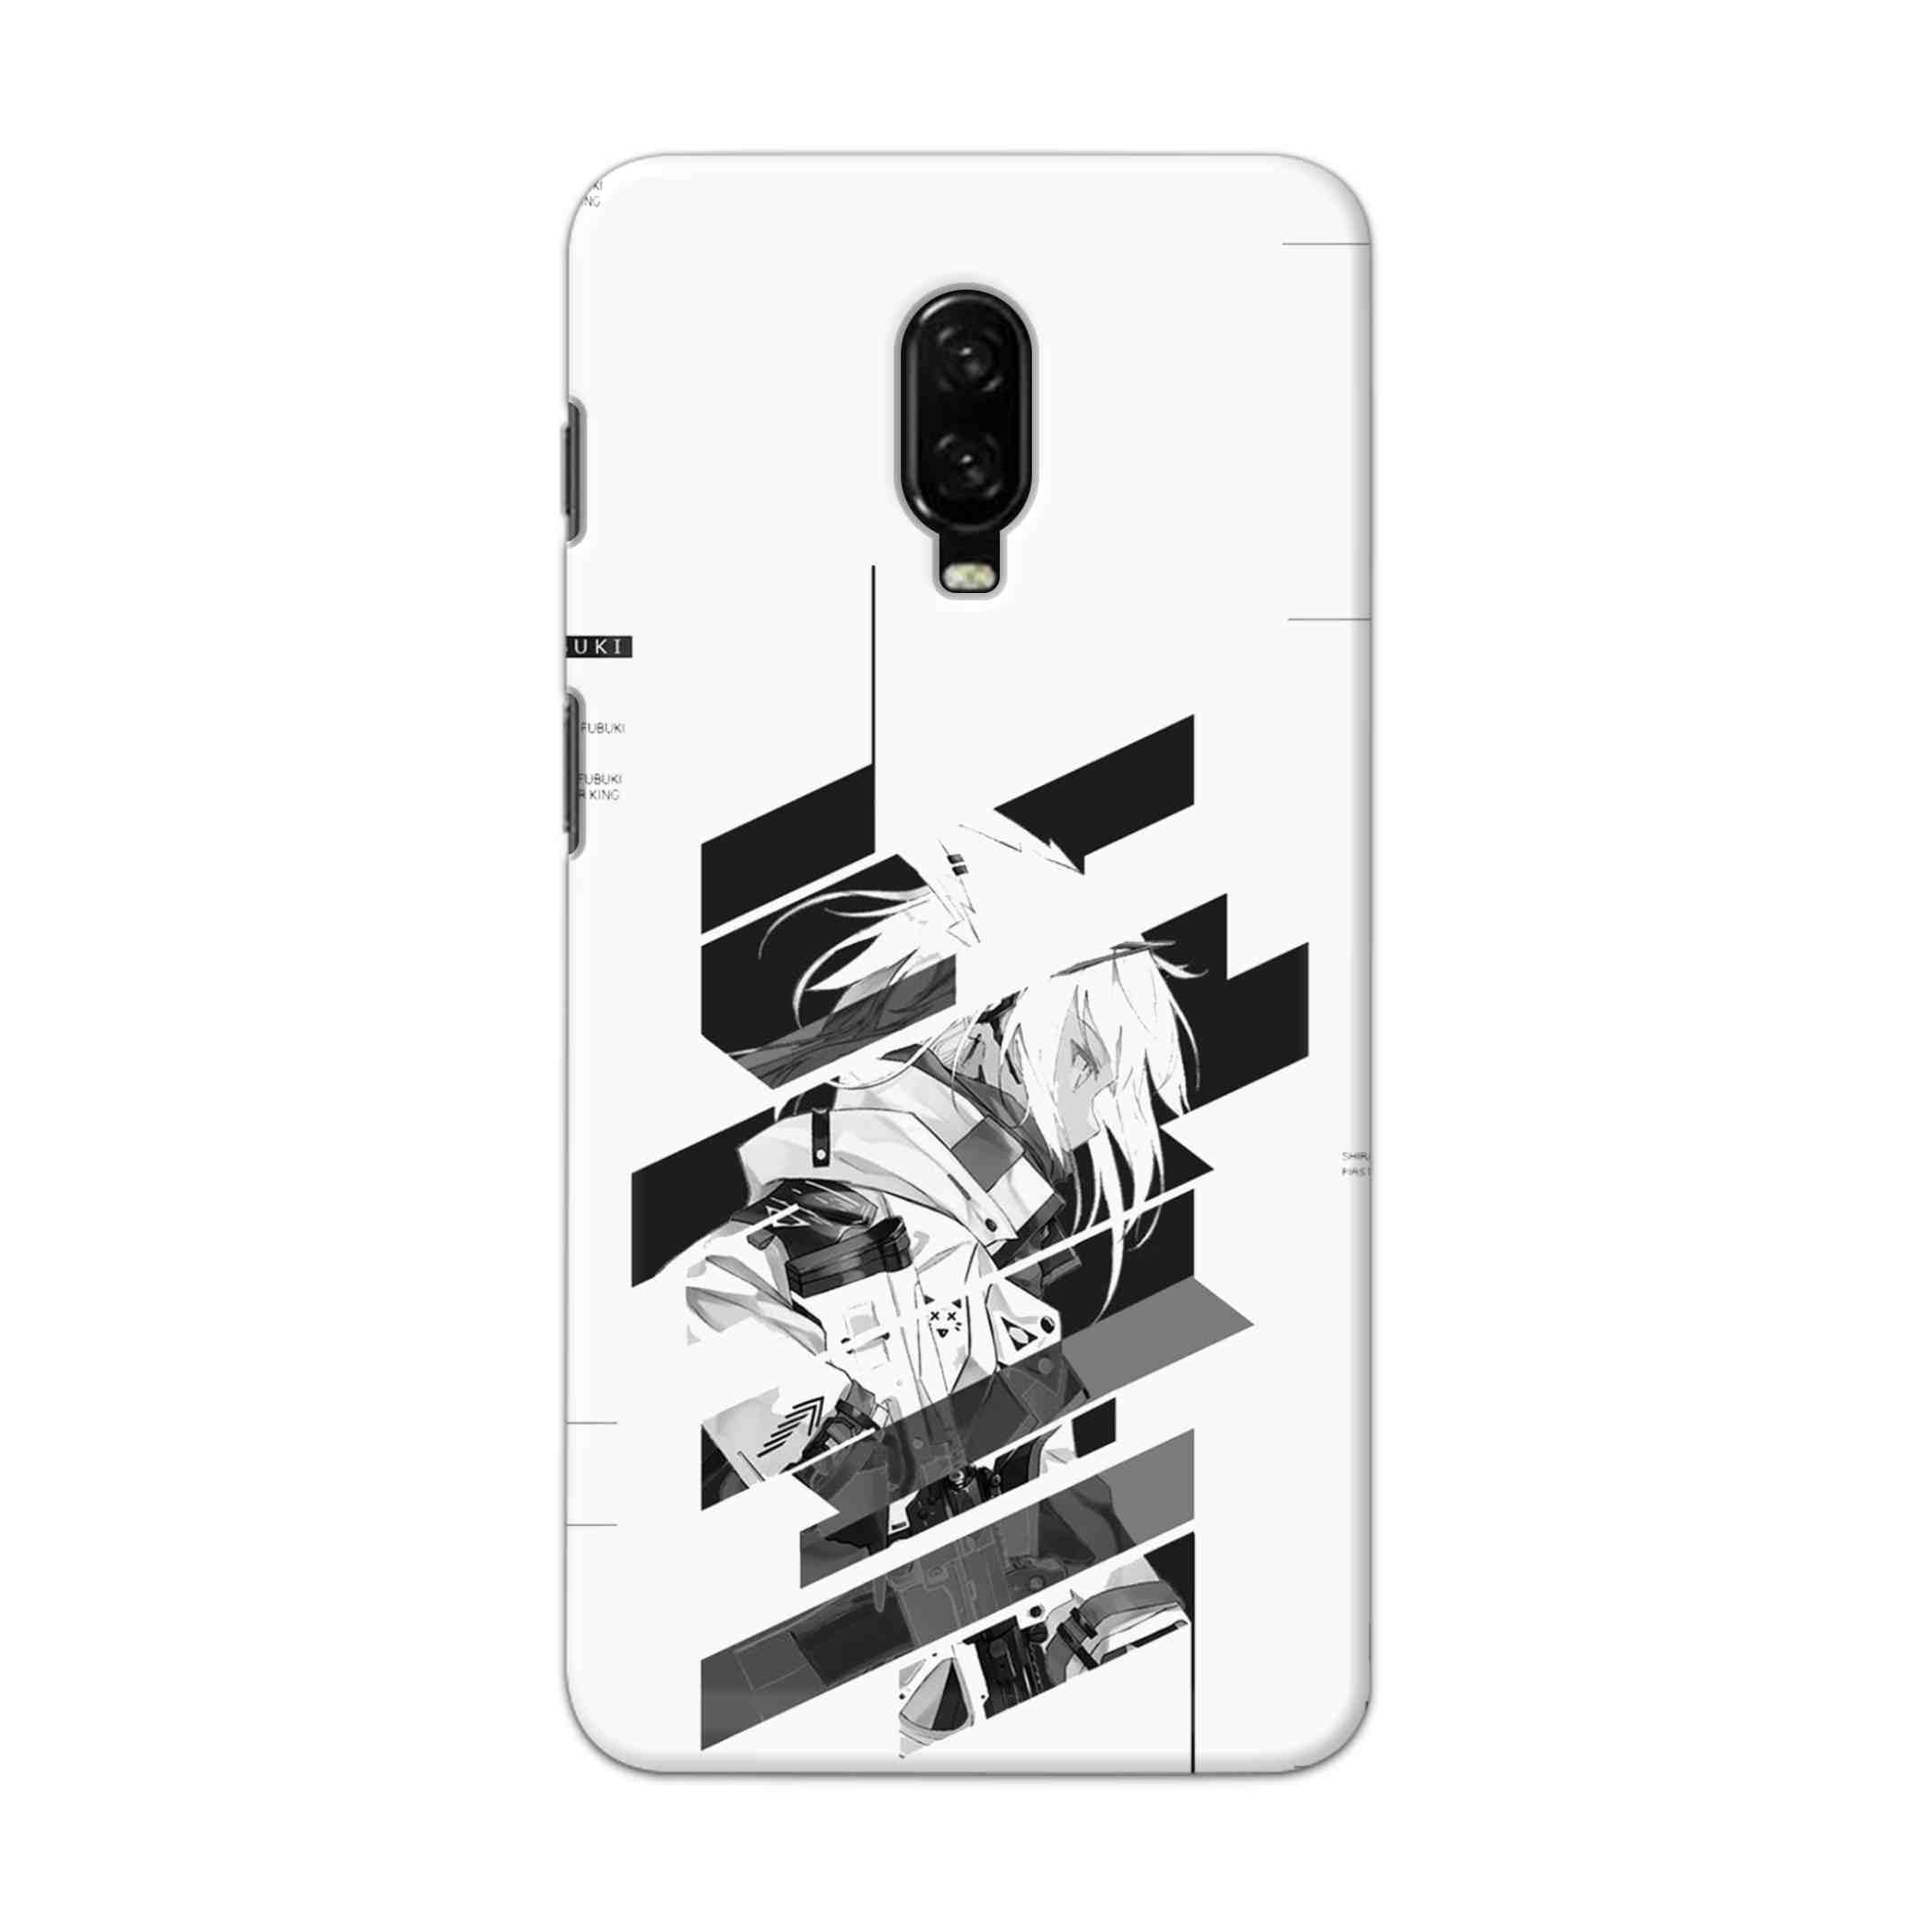 Buy Fubuki Hard Back Mobile Phone Case Cover For OnePlus 6T Online